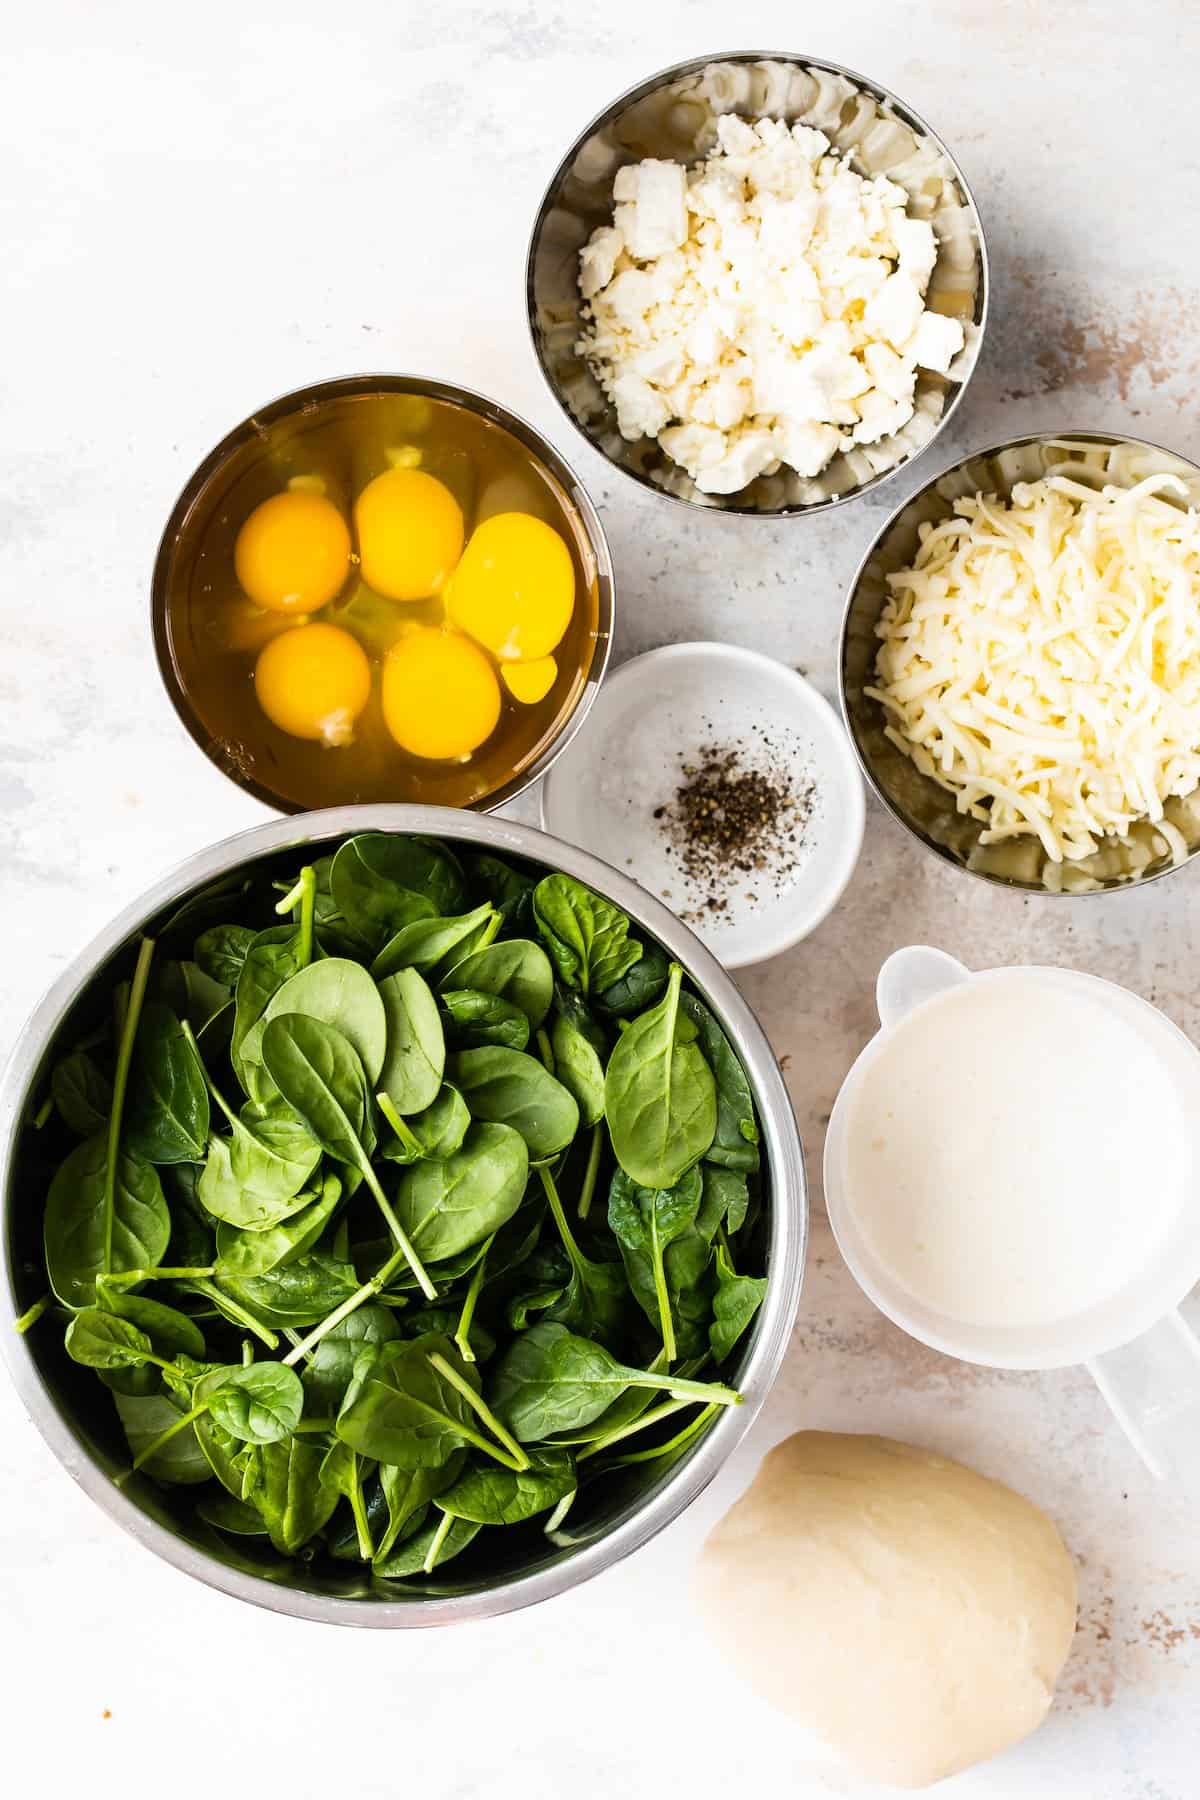 Ingredients for spinach quiche.